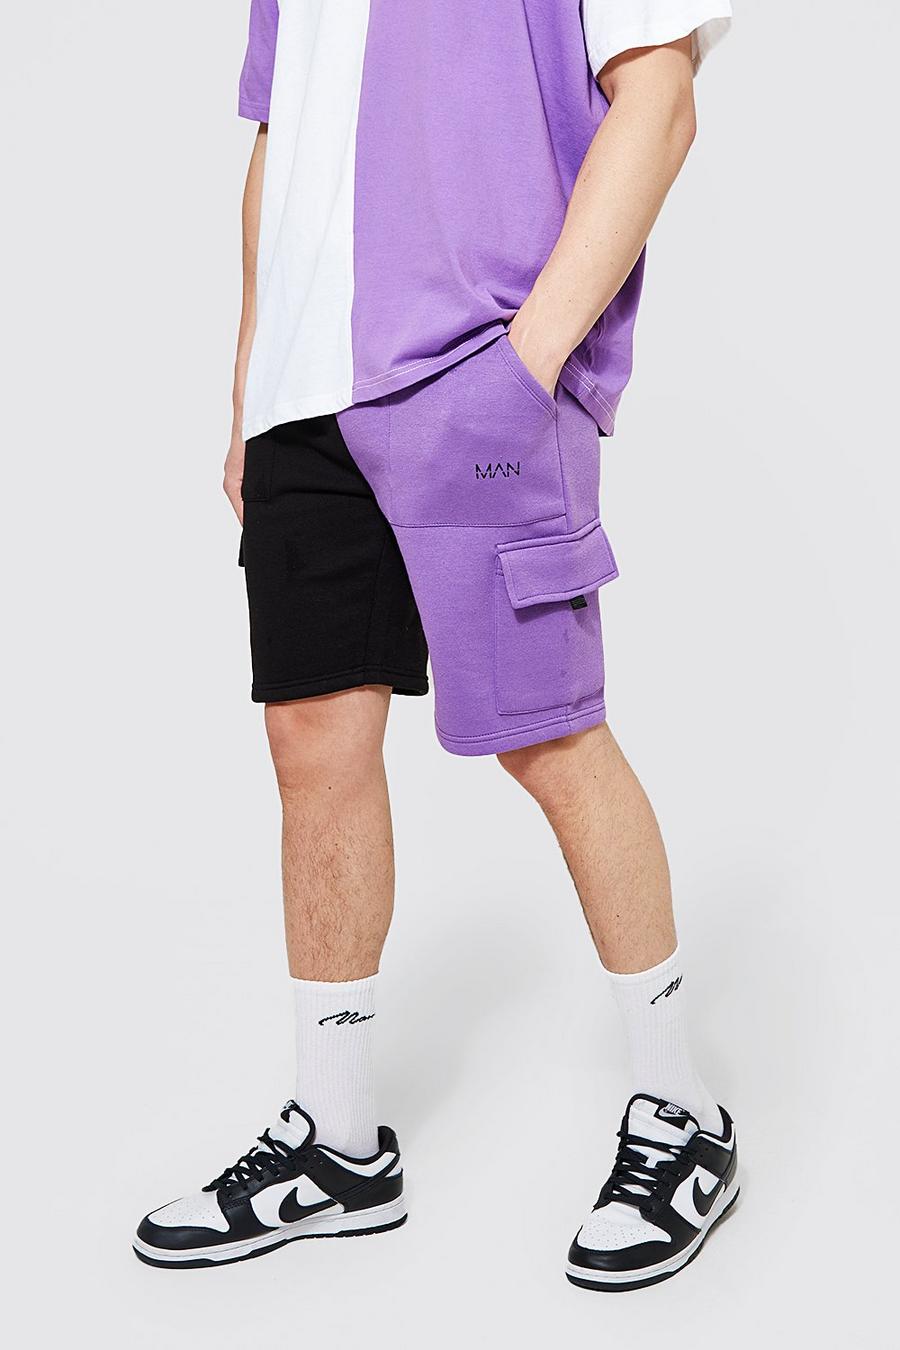 Lockere gespleißte Man Cargo Jersey-Shorts, Purple